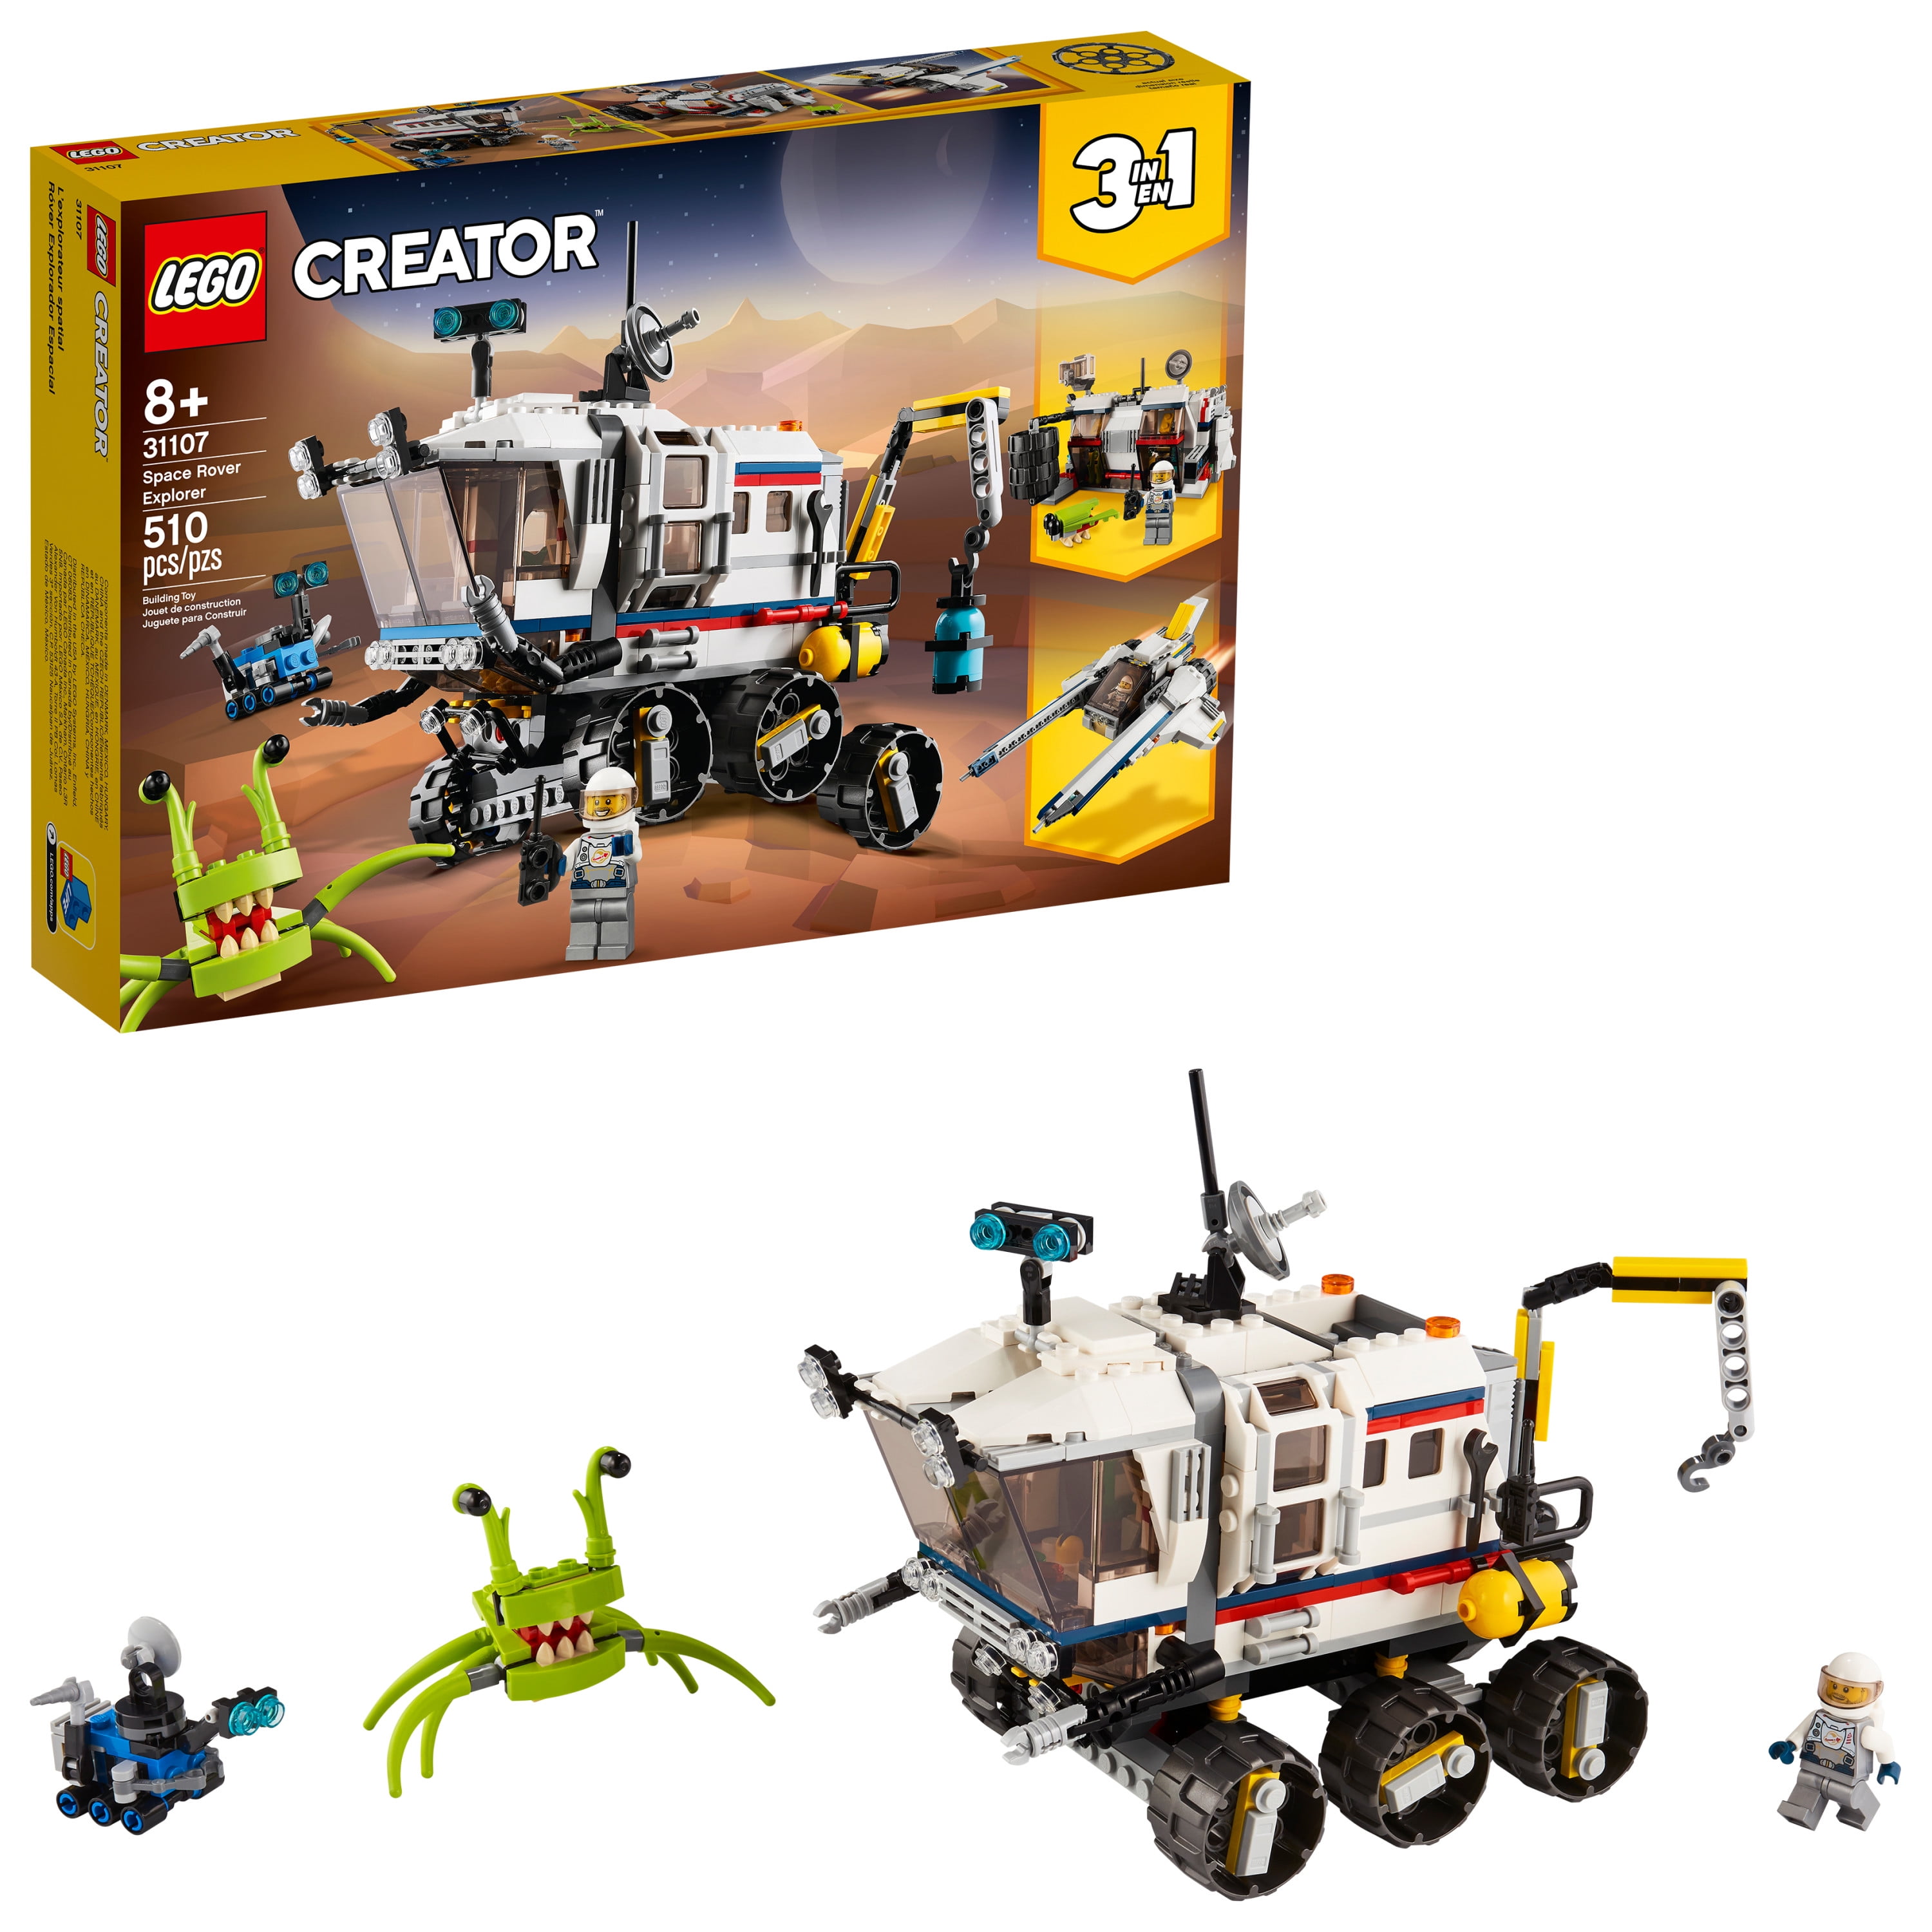 LEGO Creator 3in1 Space Rover Explorer Building Set 31107 Age 5 510pcs